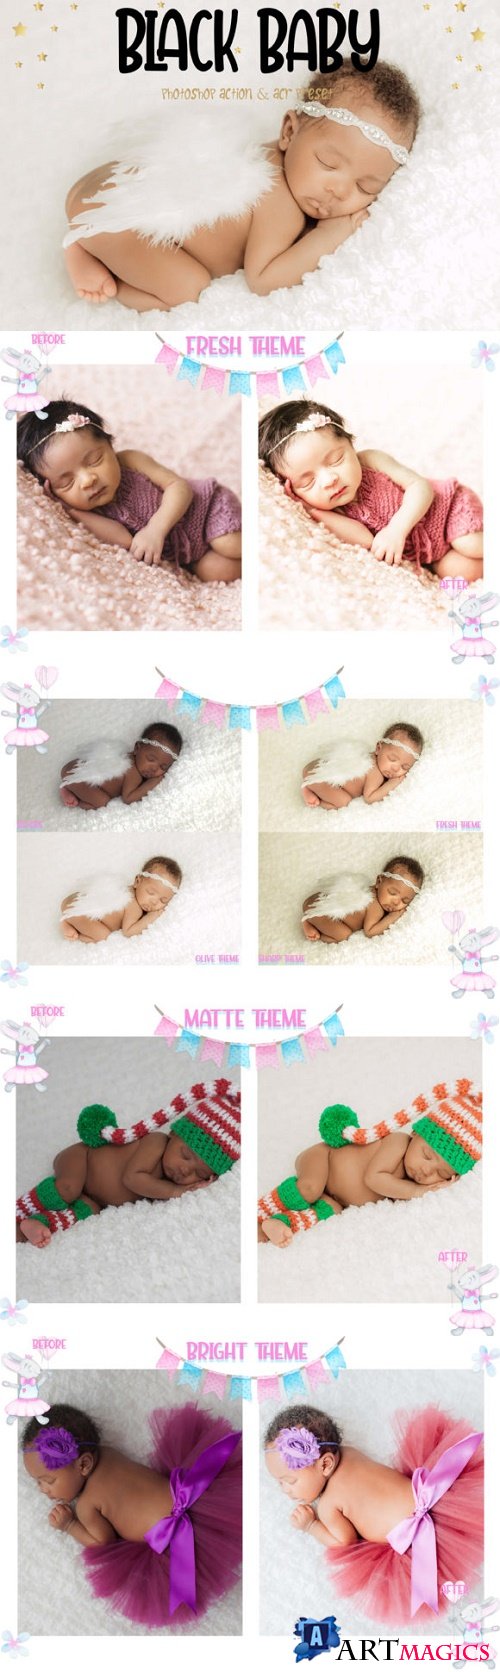 10 Black Baby Photoshop Actions